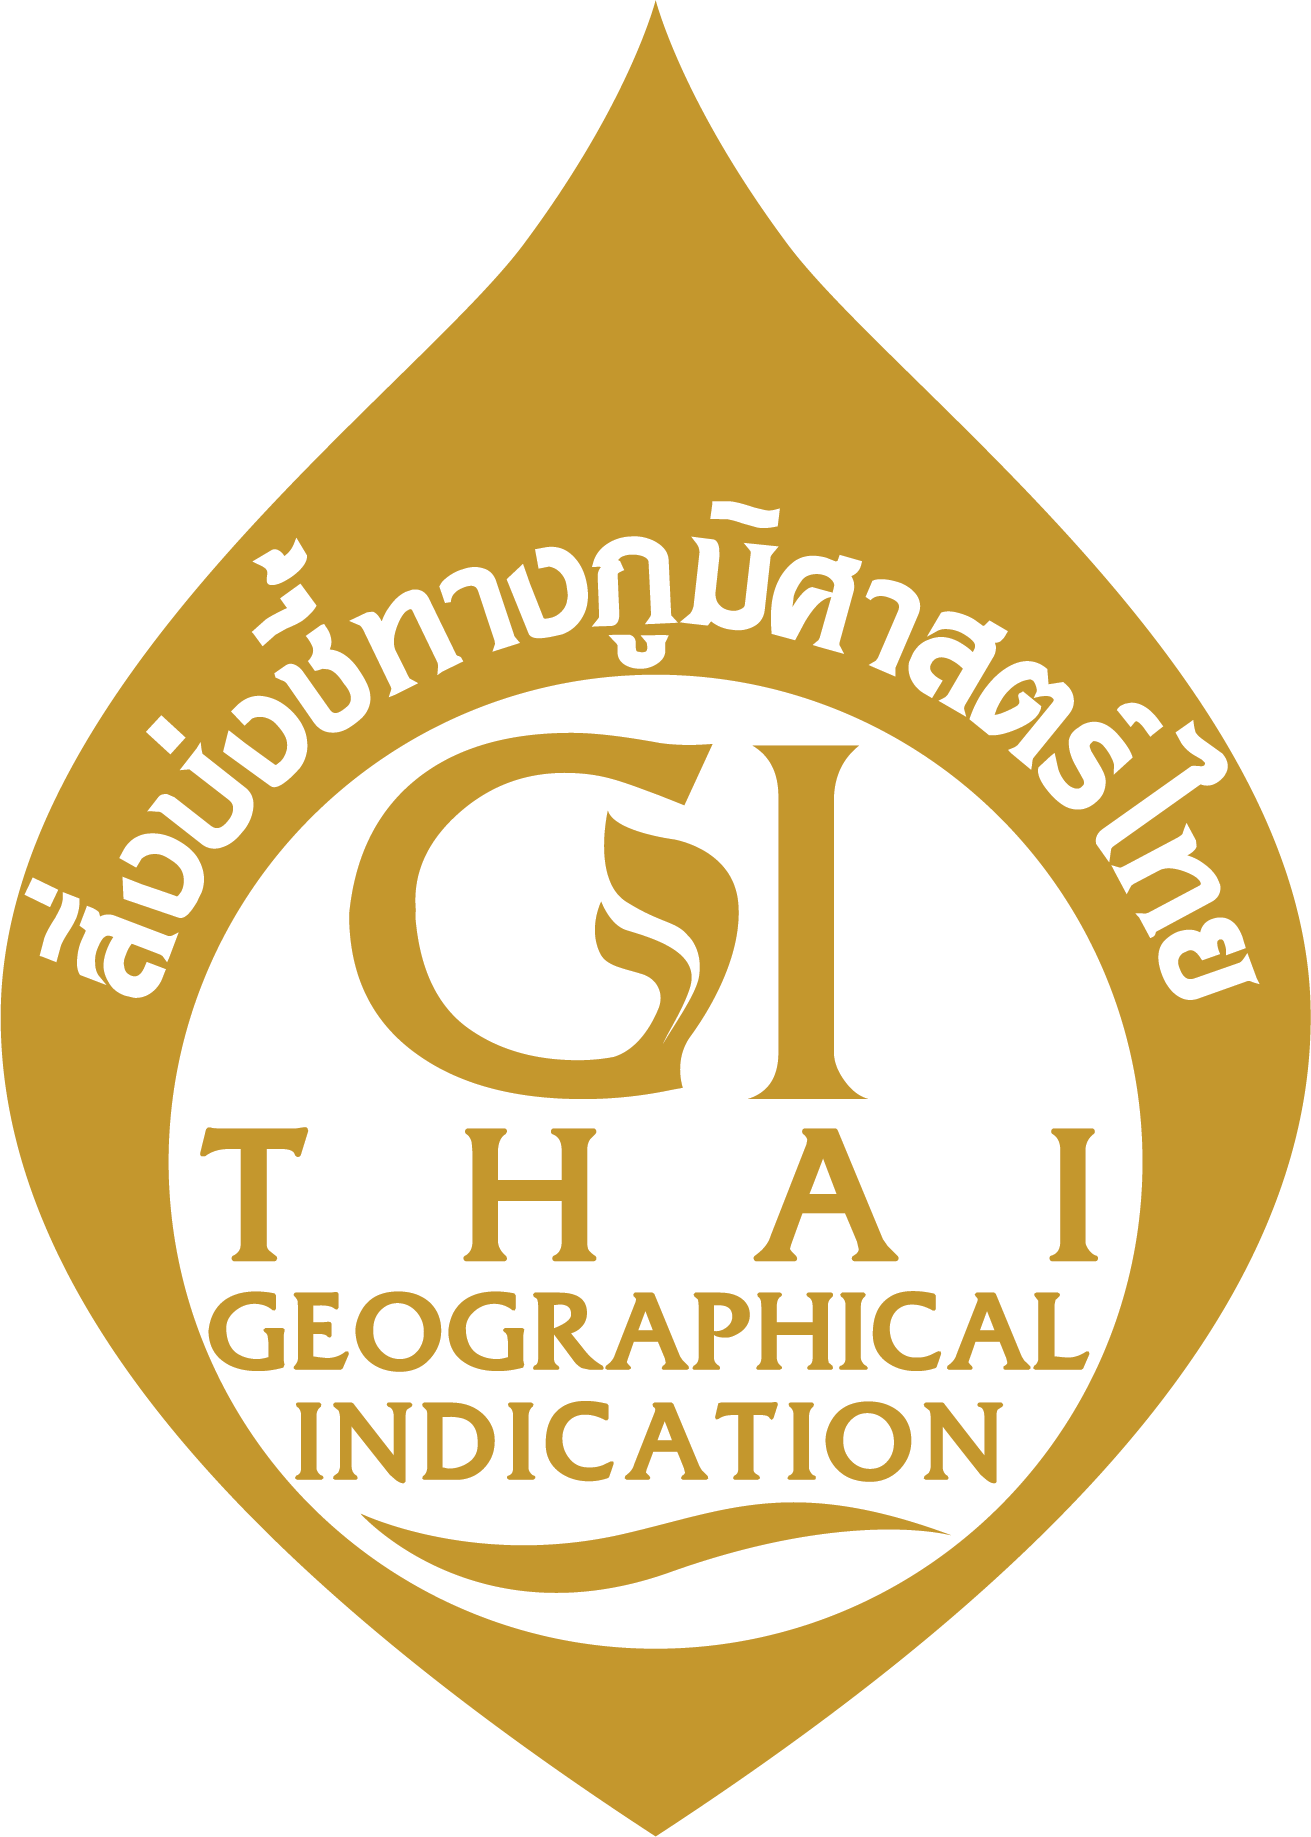 Geographical Indication (GI)